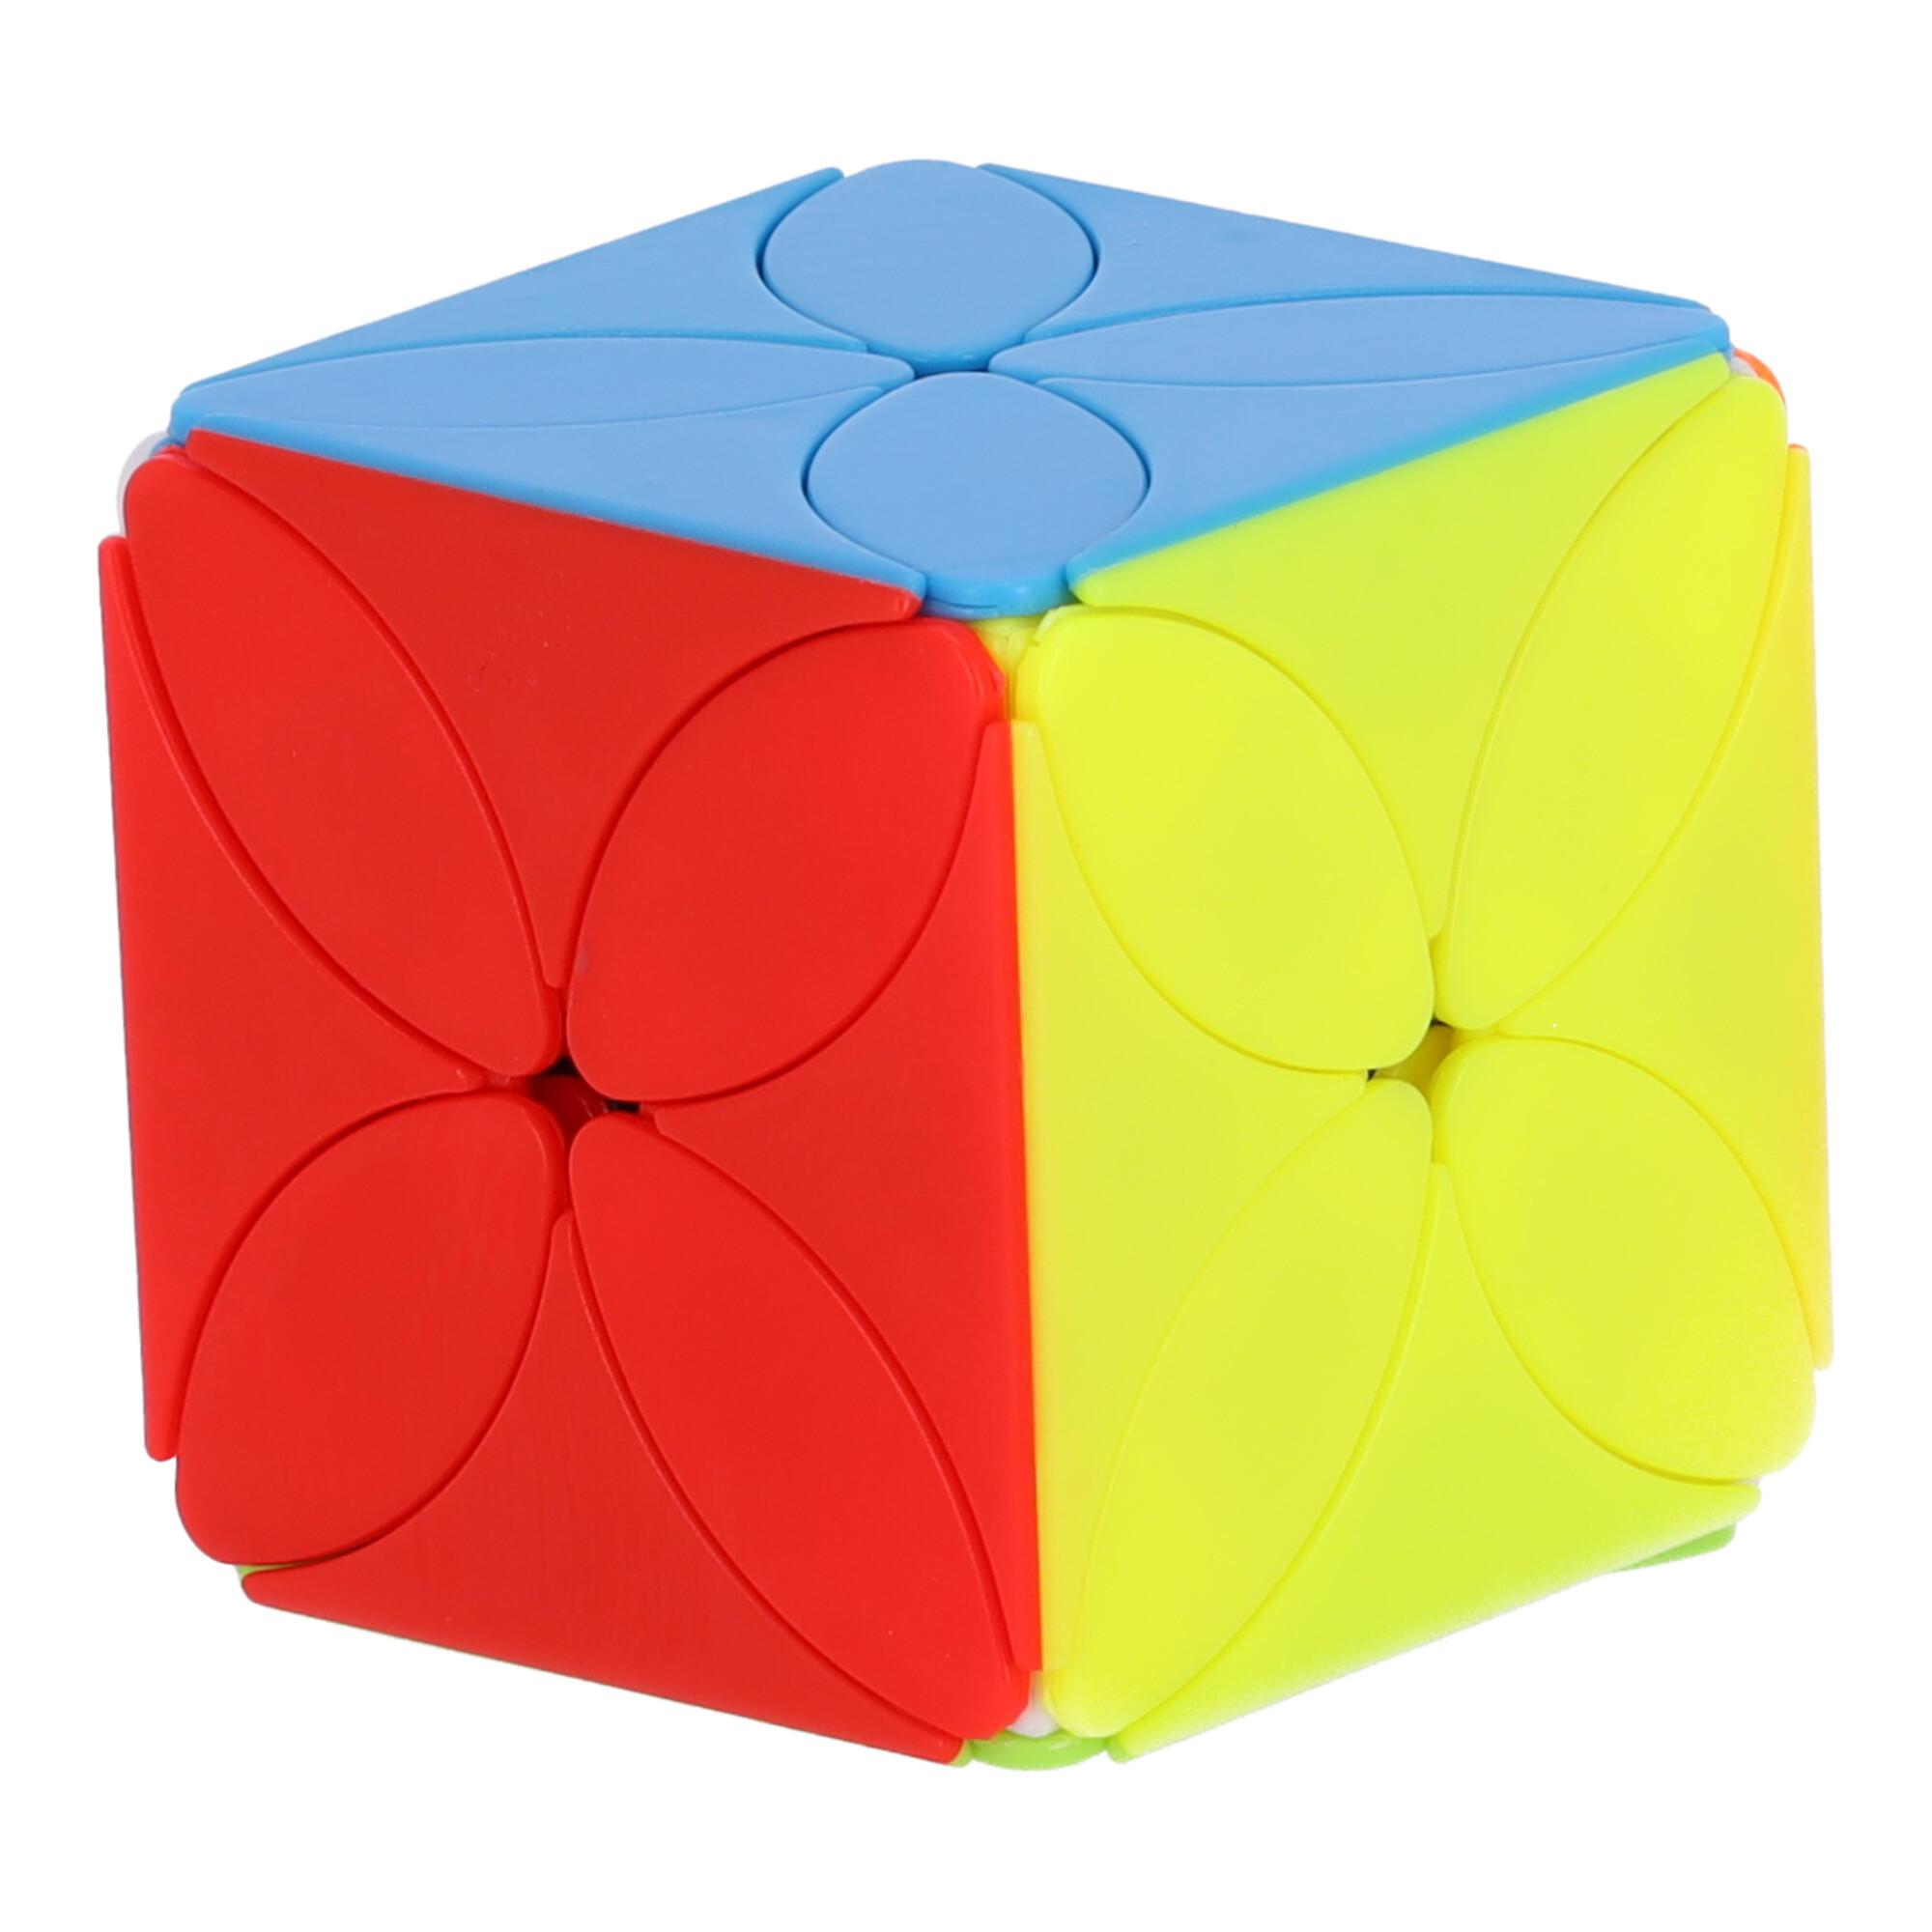 Modern jigsaw puzzle, logic cube, Rubik's Cube - Leaf Clover's, type II